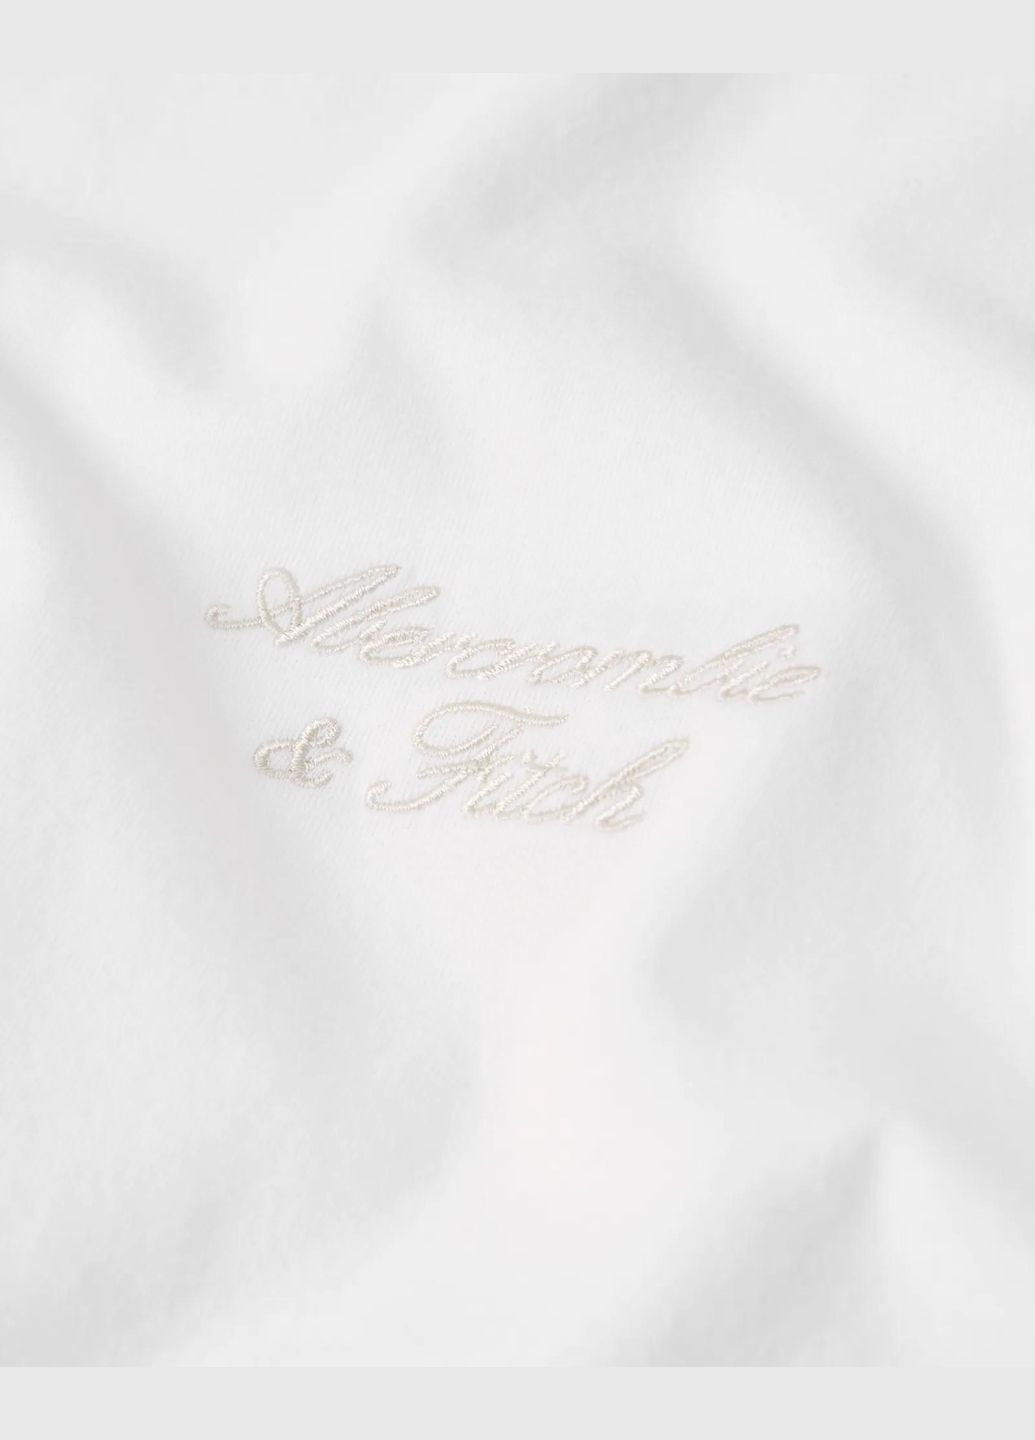 Белая летняя футболка женская af9053w Abercrombie & Fitch